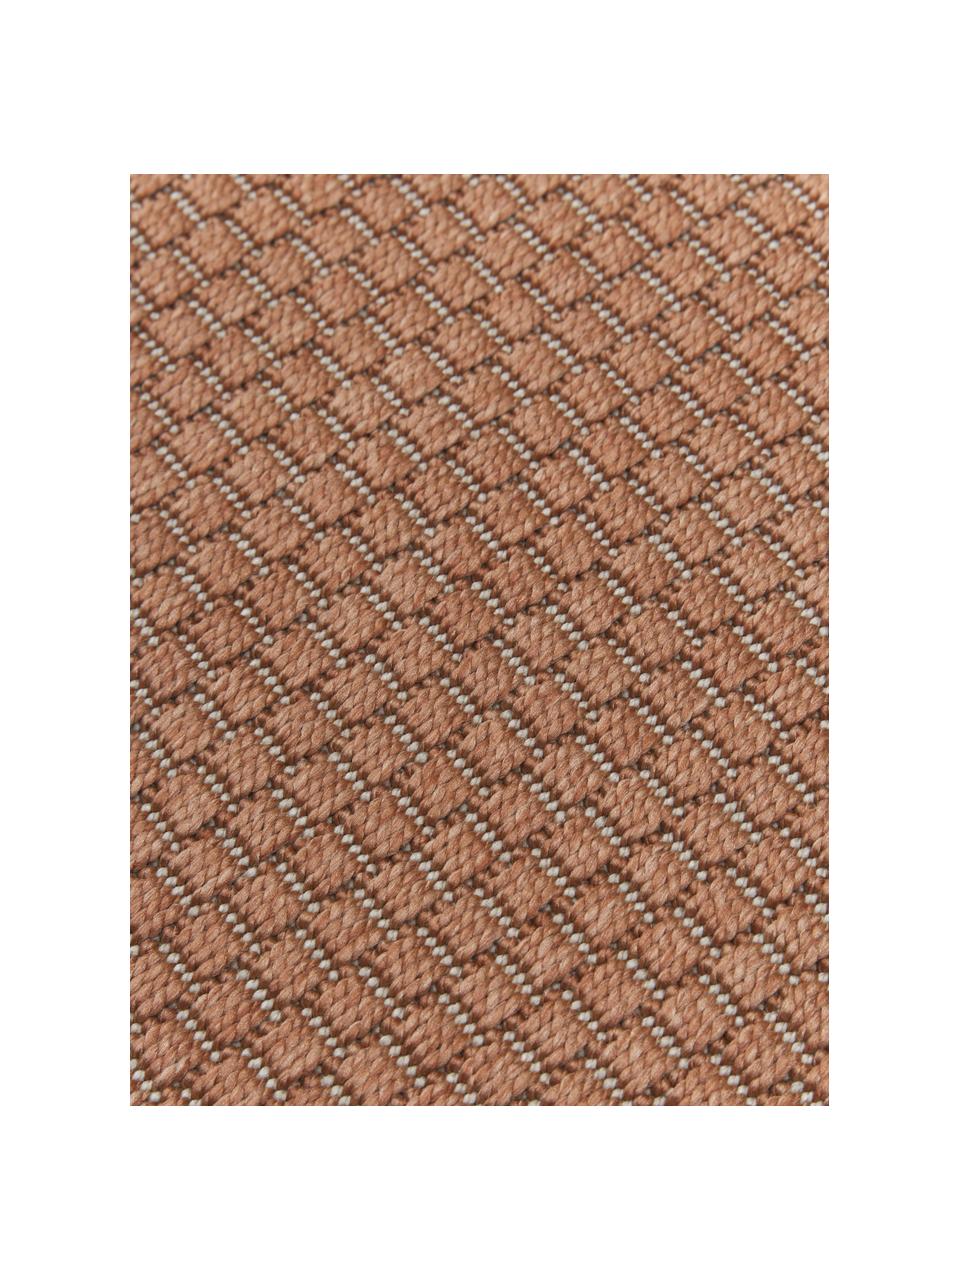 Ovaler In- & Outdoor-Teppich Toronto in Terrakotta, 100% Polypropylen, Terrakotta, B 200 x L 300 cm (Grösse L)